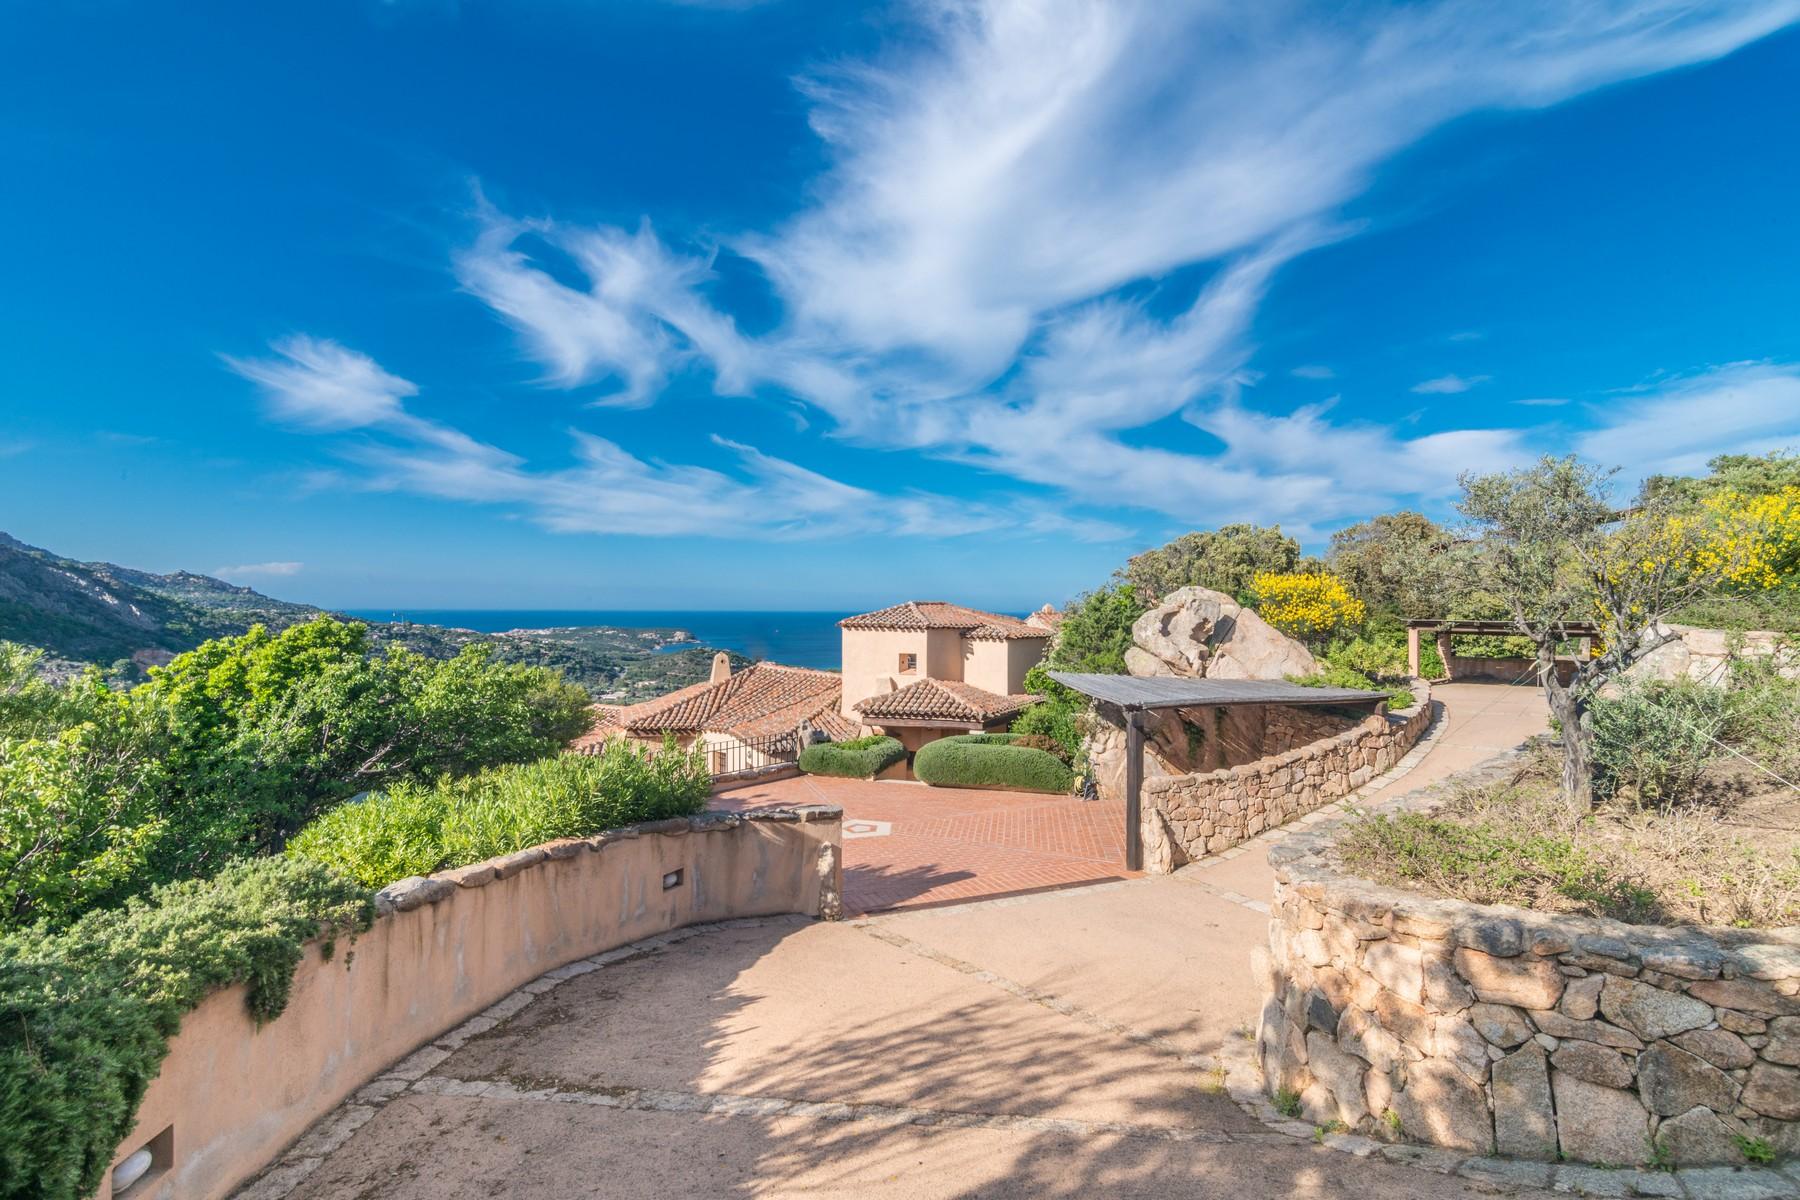 Porto Cervo Abbiadori Splendide villa jumelée avec vue sur le golfe de Pevero - 38